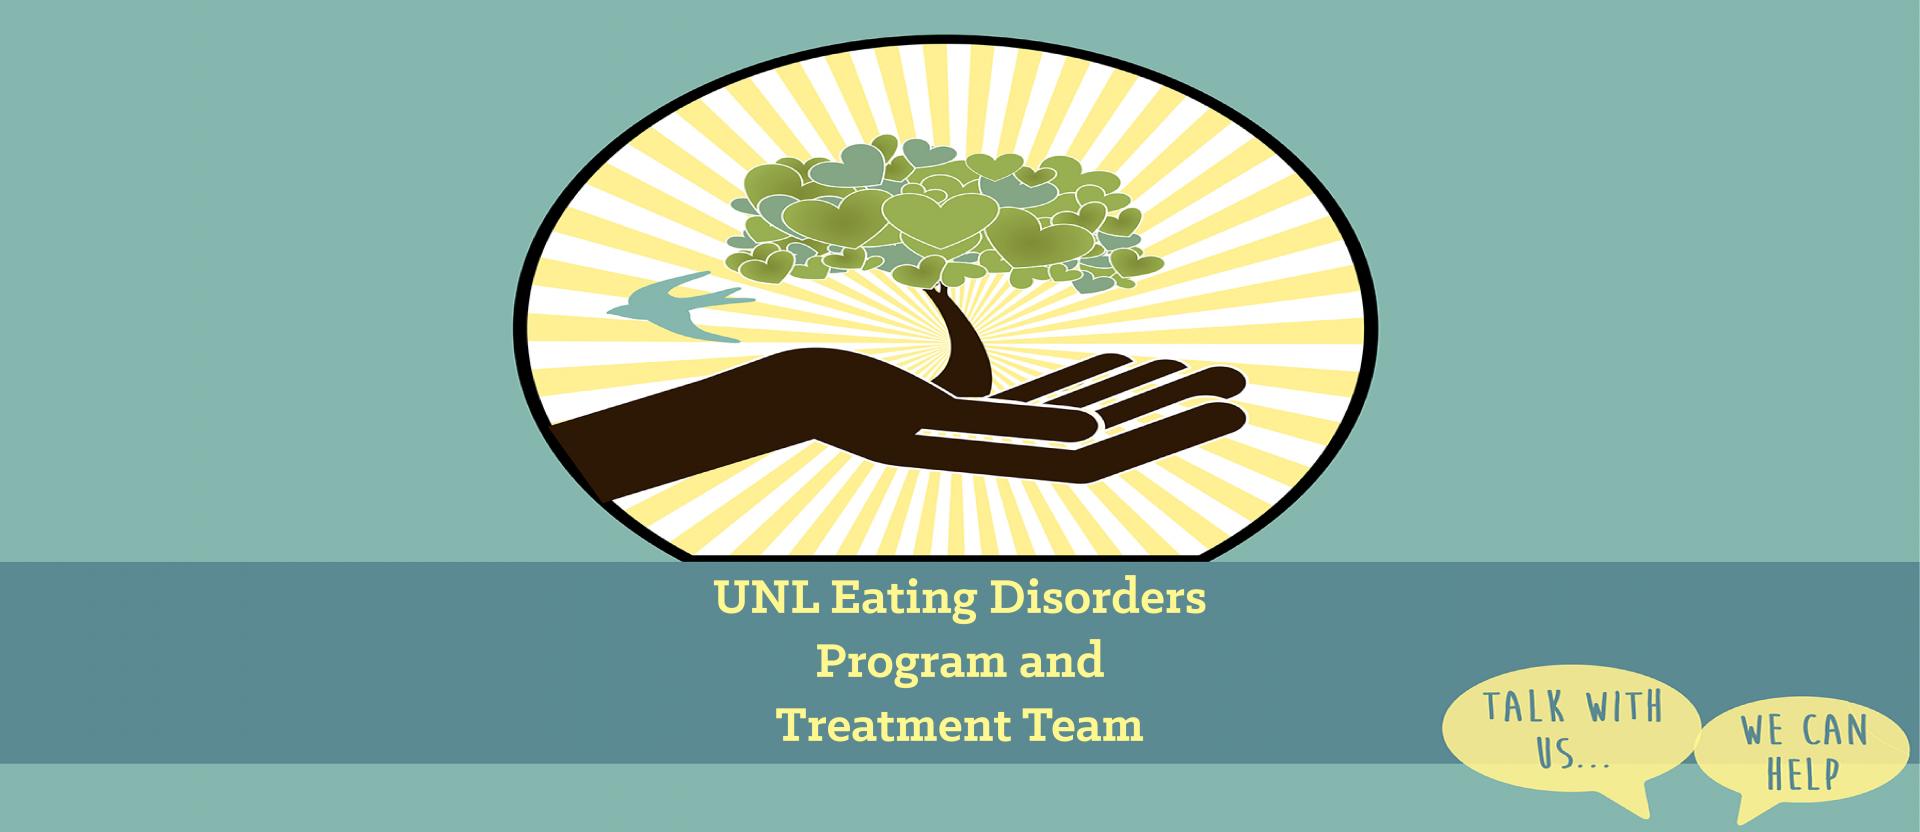 Eating Disorder Treatment Team